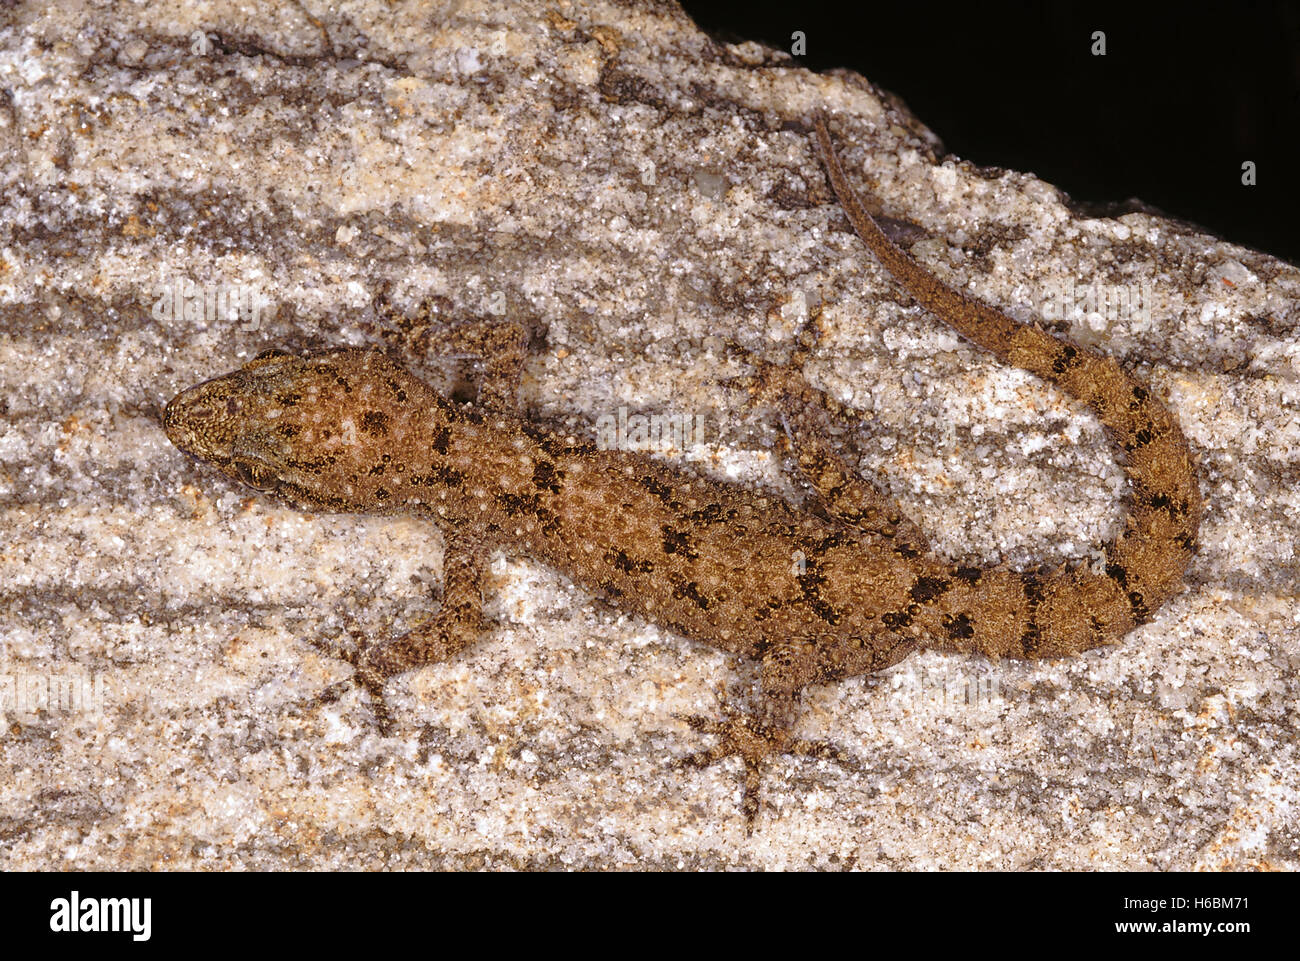 Hemidactylus Brooki. Brook's gecko. A very common gecko found in a variety of habitats. Stock Photo